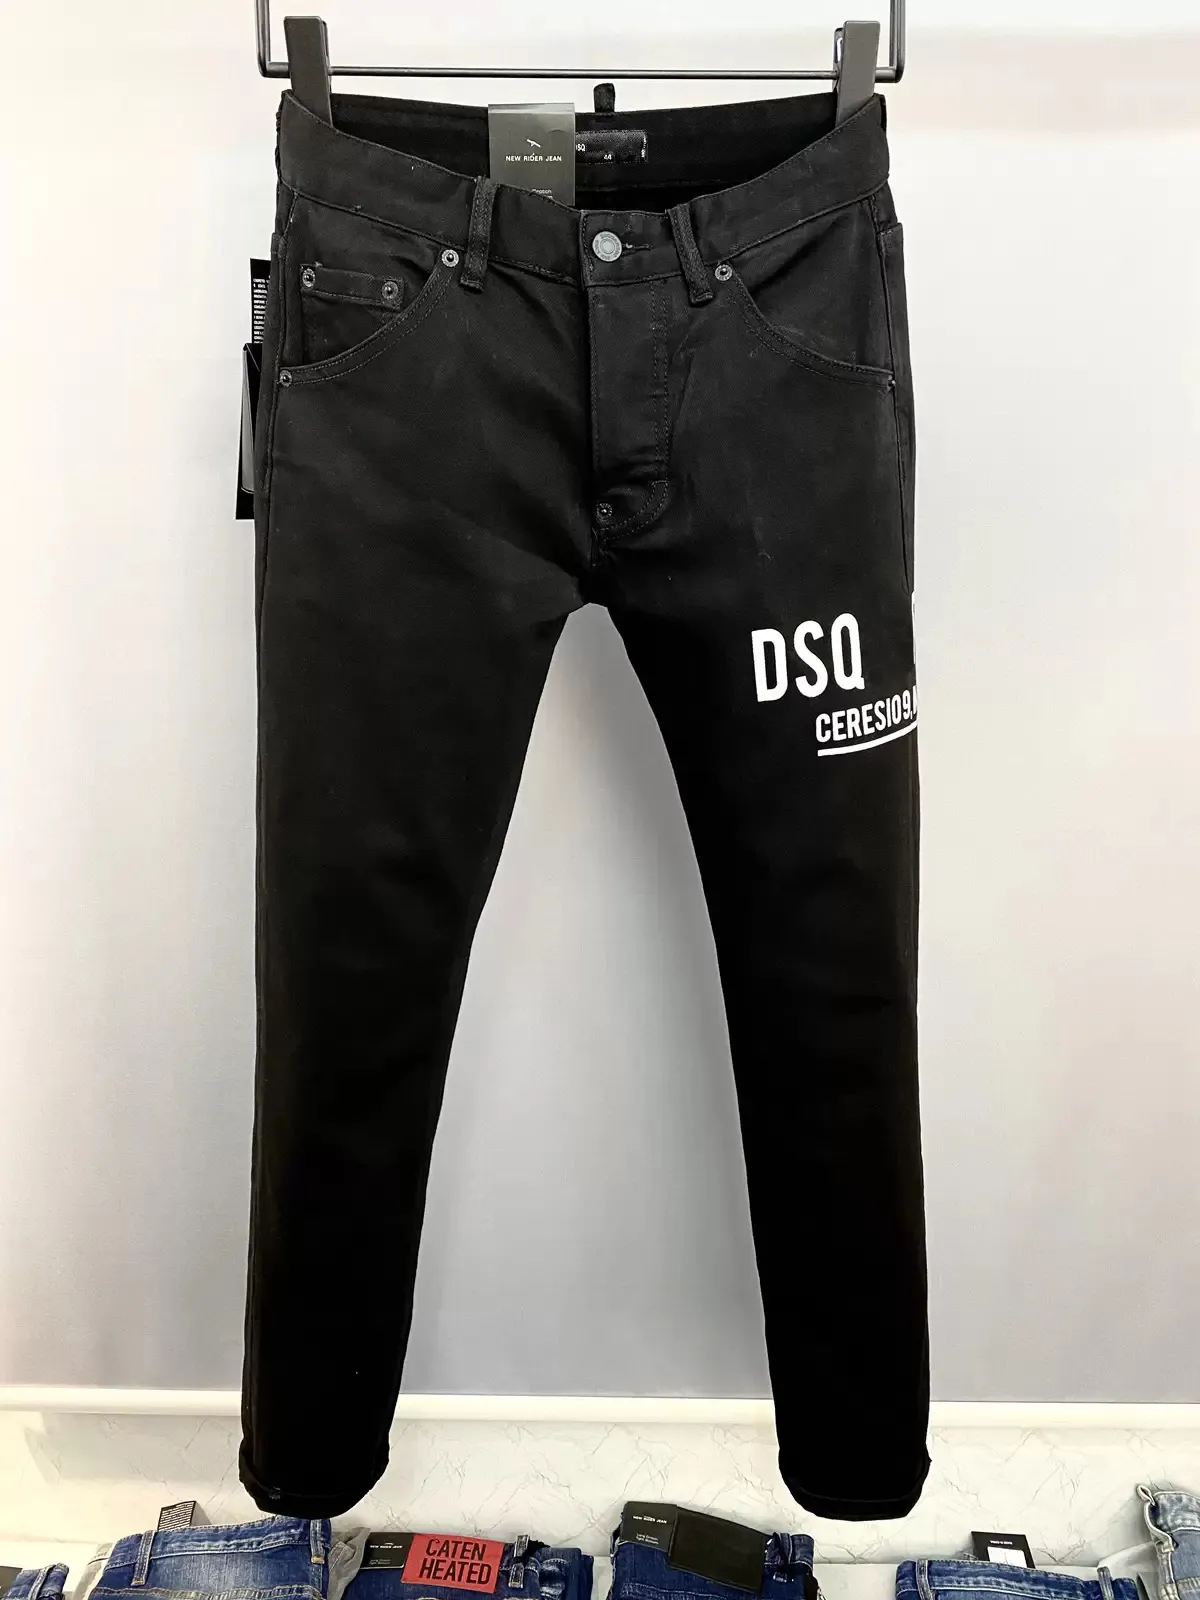 DSQ Coolguy Black Jeans Classic Hip Hop Rock Moto Mens Design Ripped Jean Distressed Skinny Denim DSQ2 Biker Jeans 1180